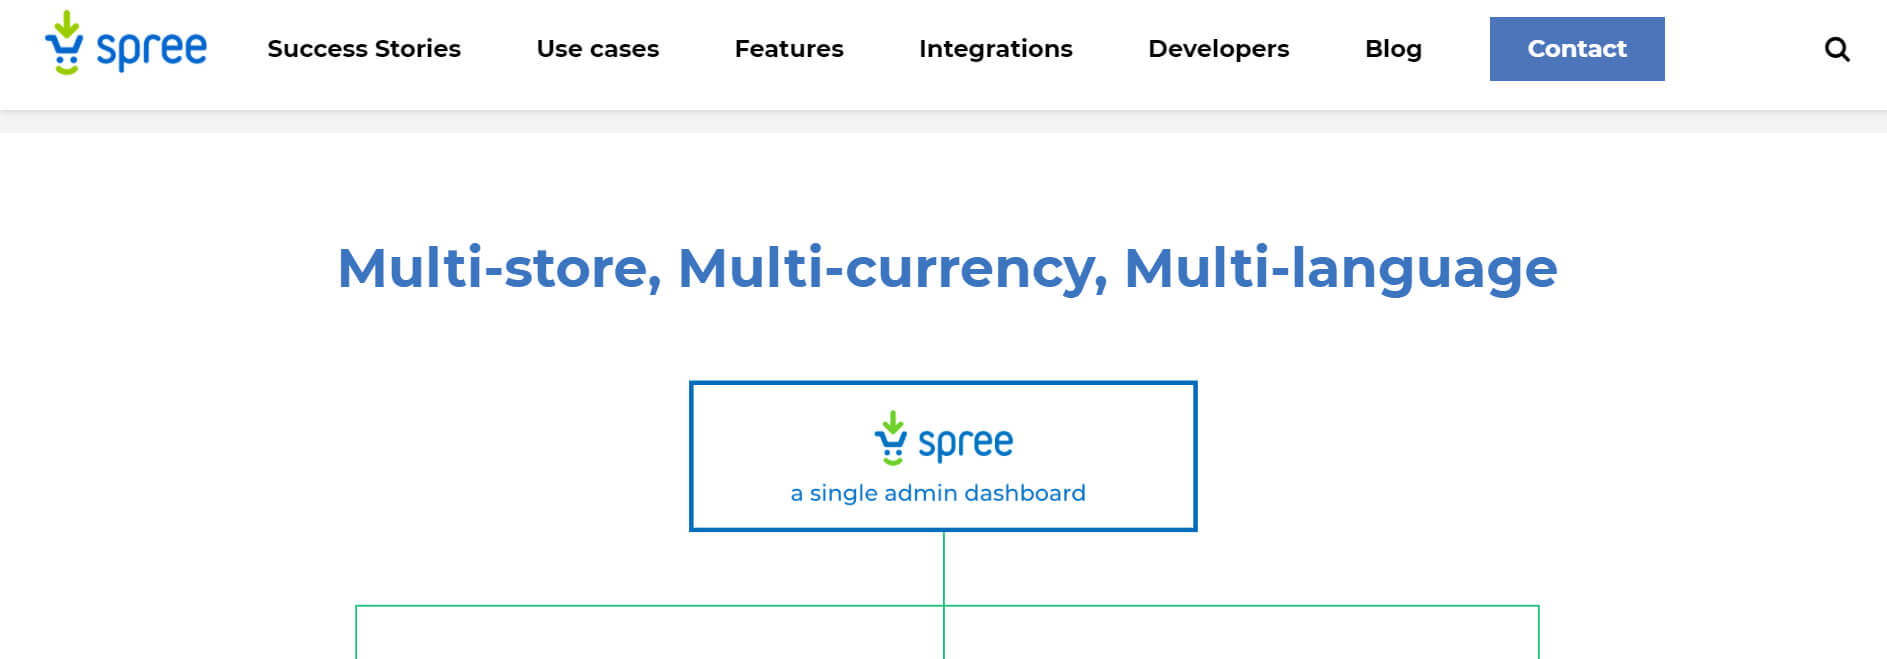 Spree Multi Vendor Marketplace Ecommerce Software and Multi-Store Platform